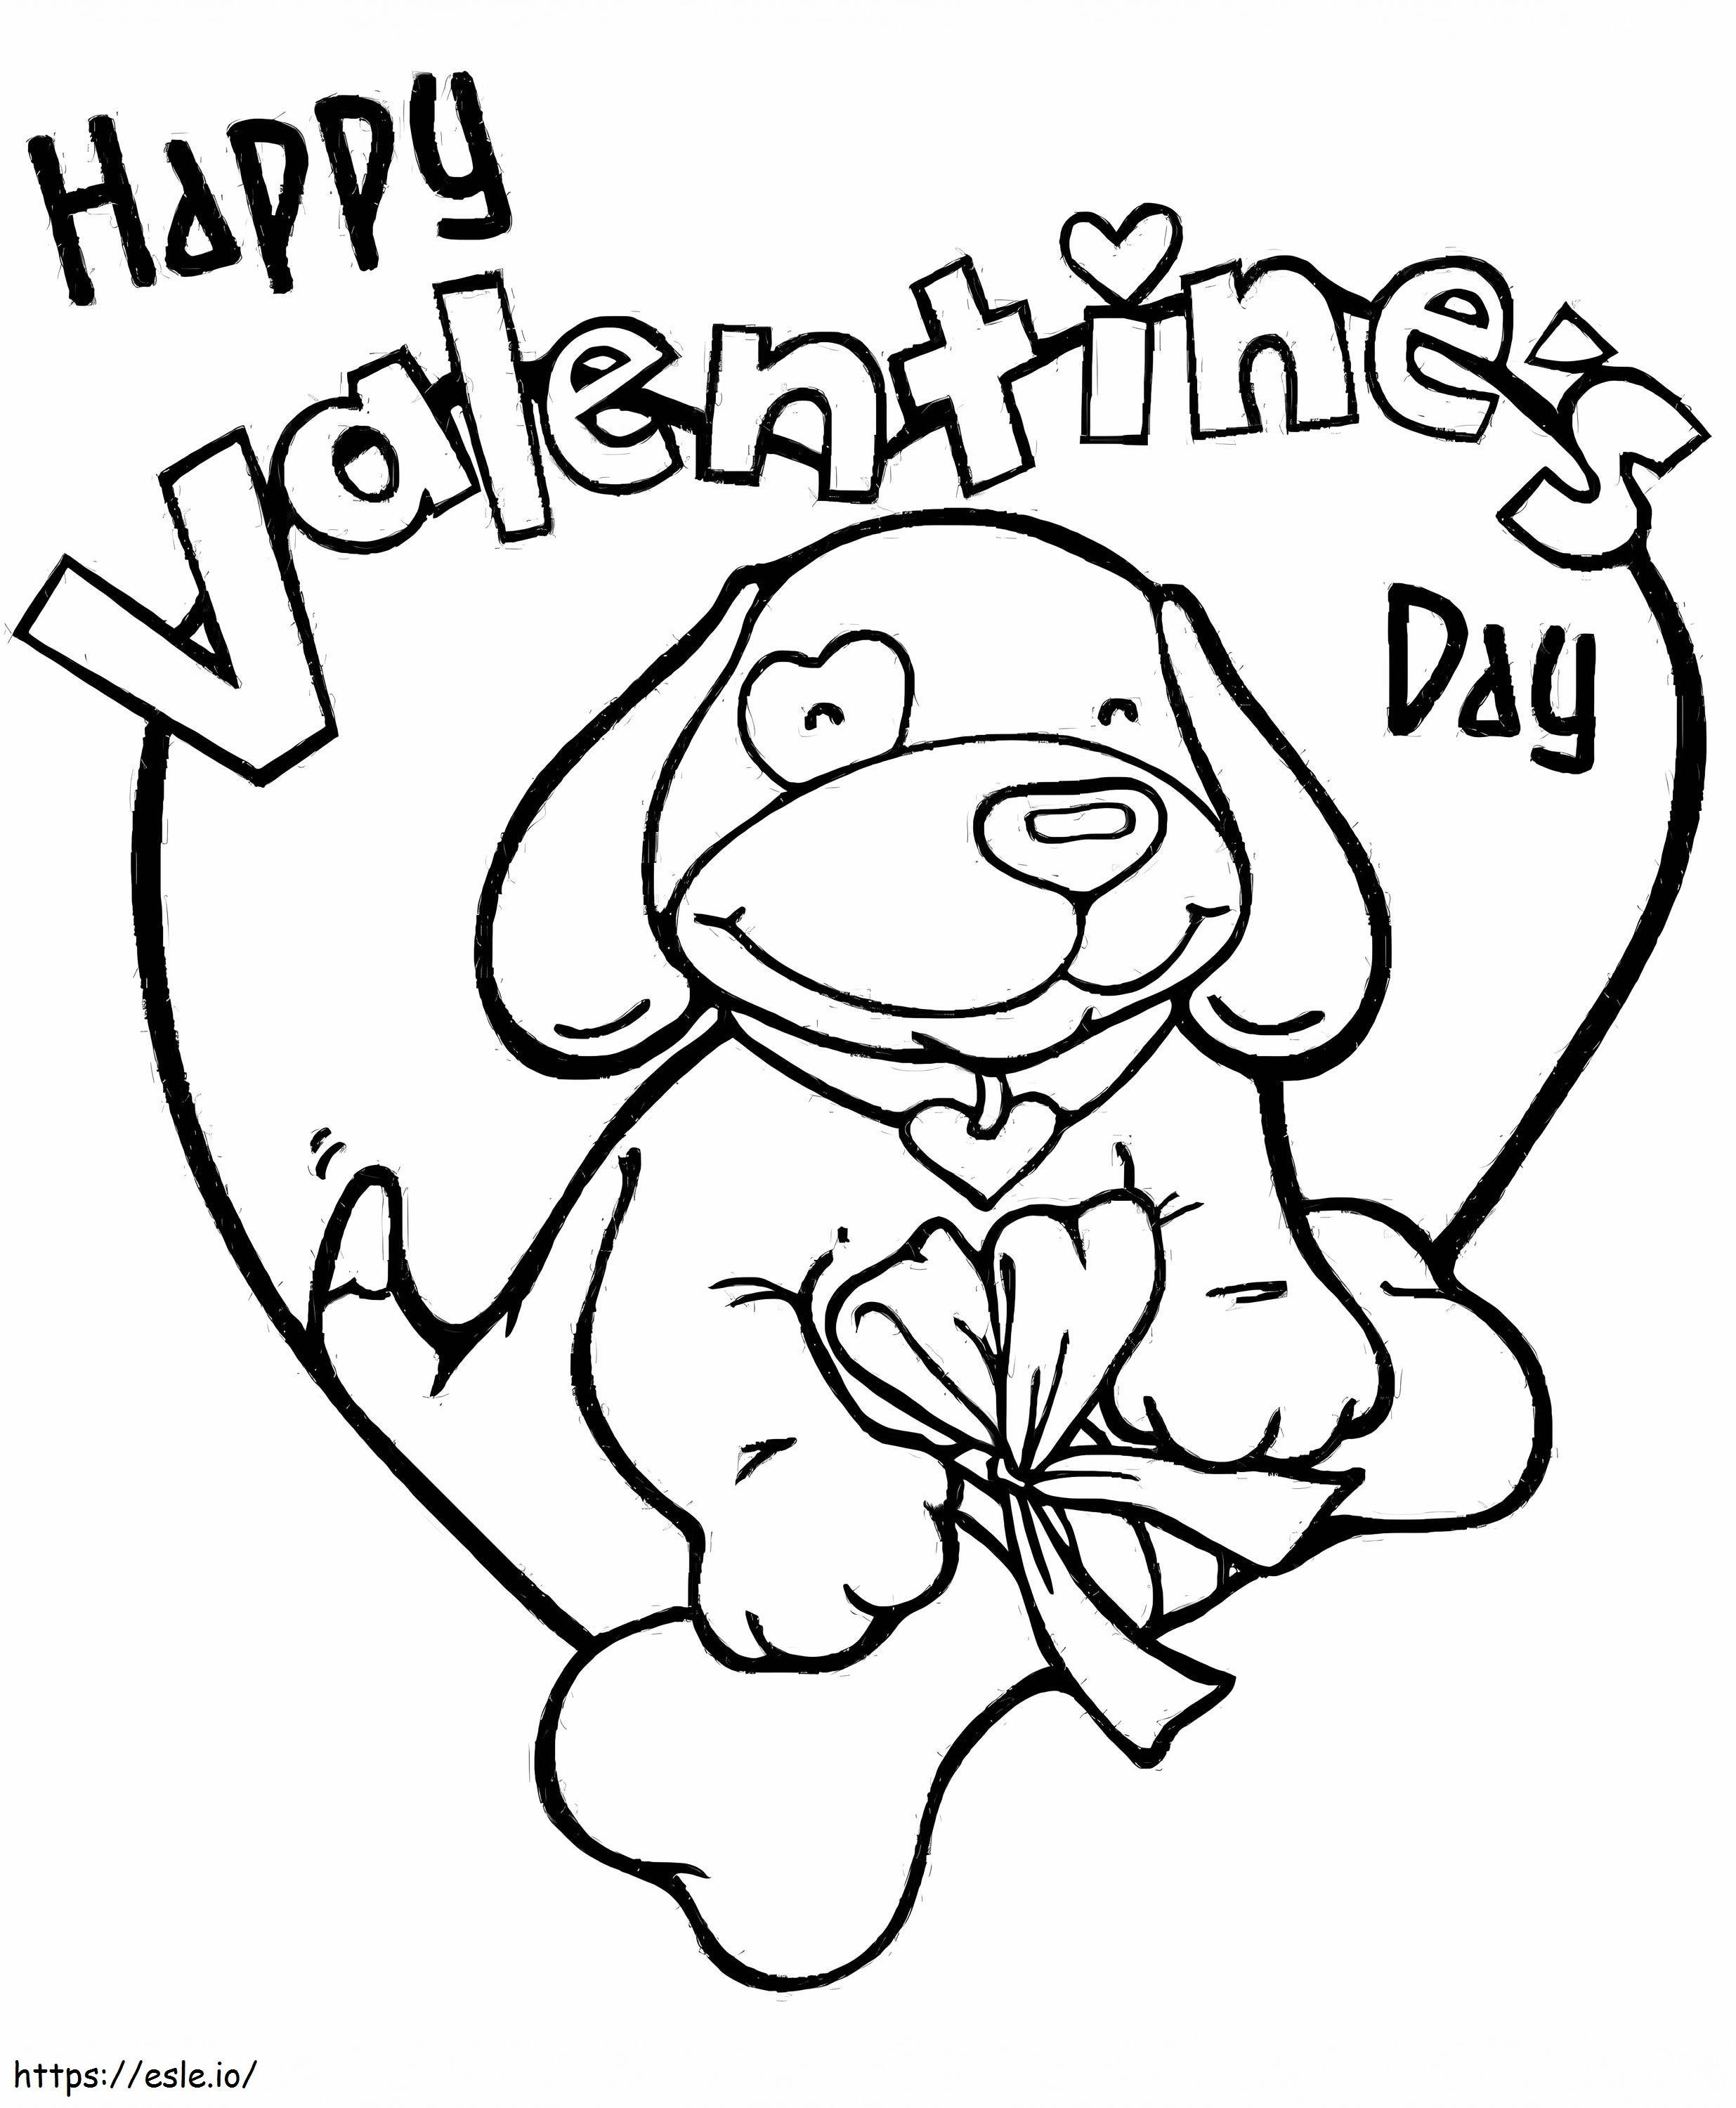 Valentines To Print Valentines Happy Valentines Day Card Printable Be My Print Valentines To coloring page